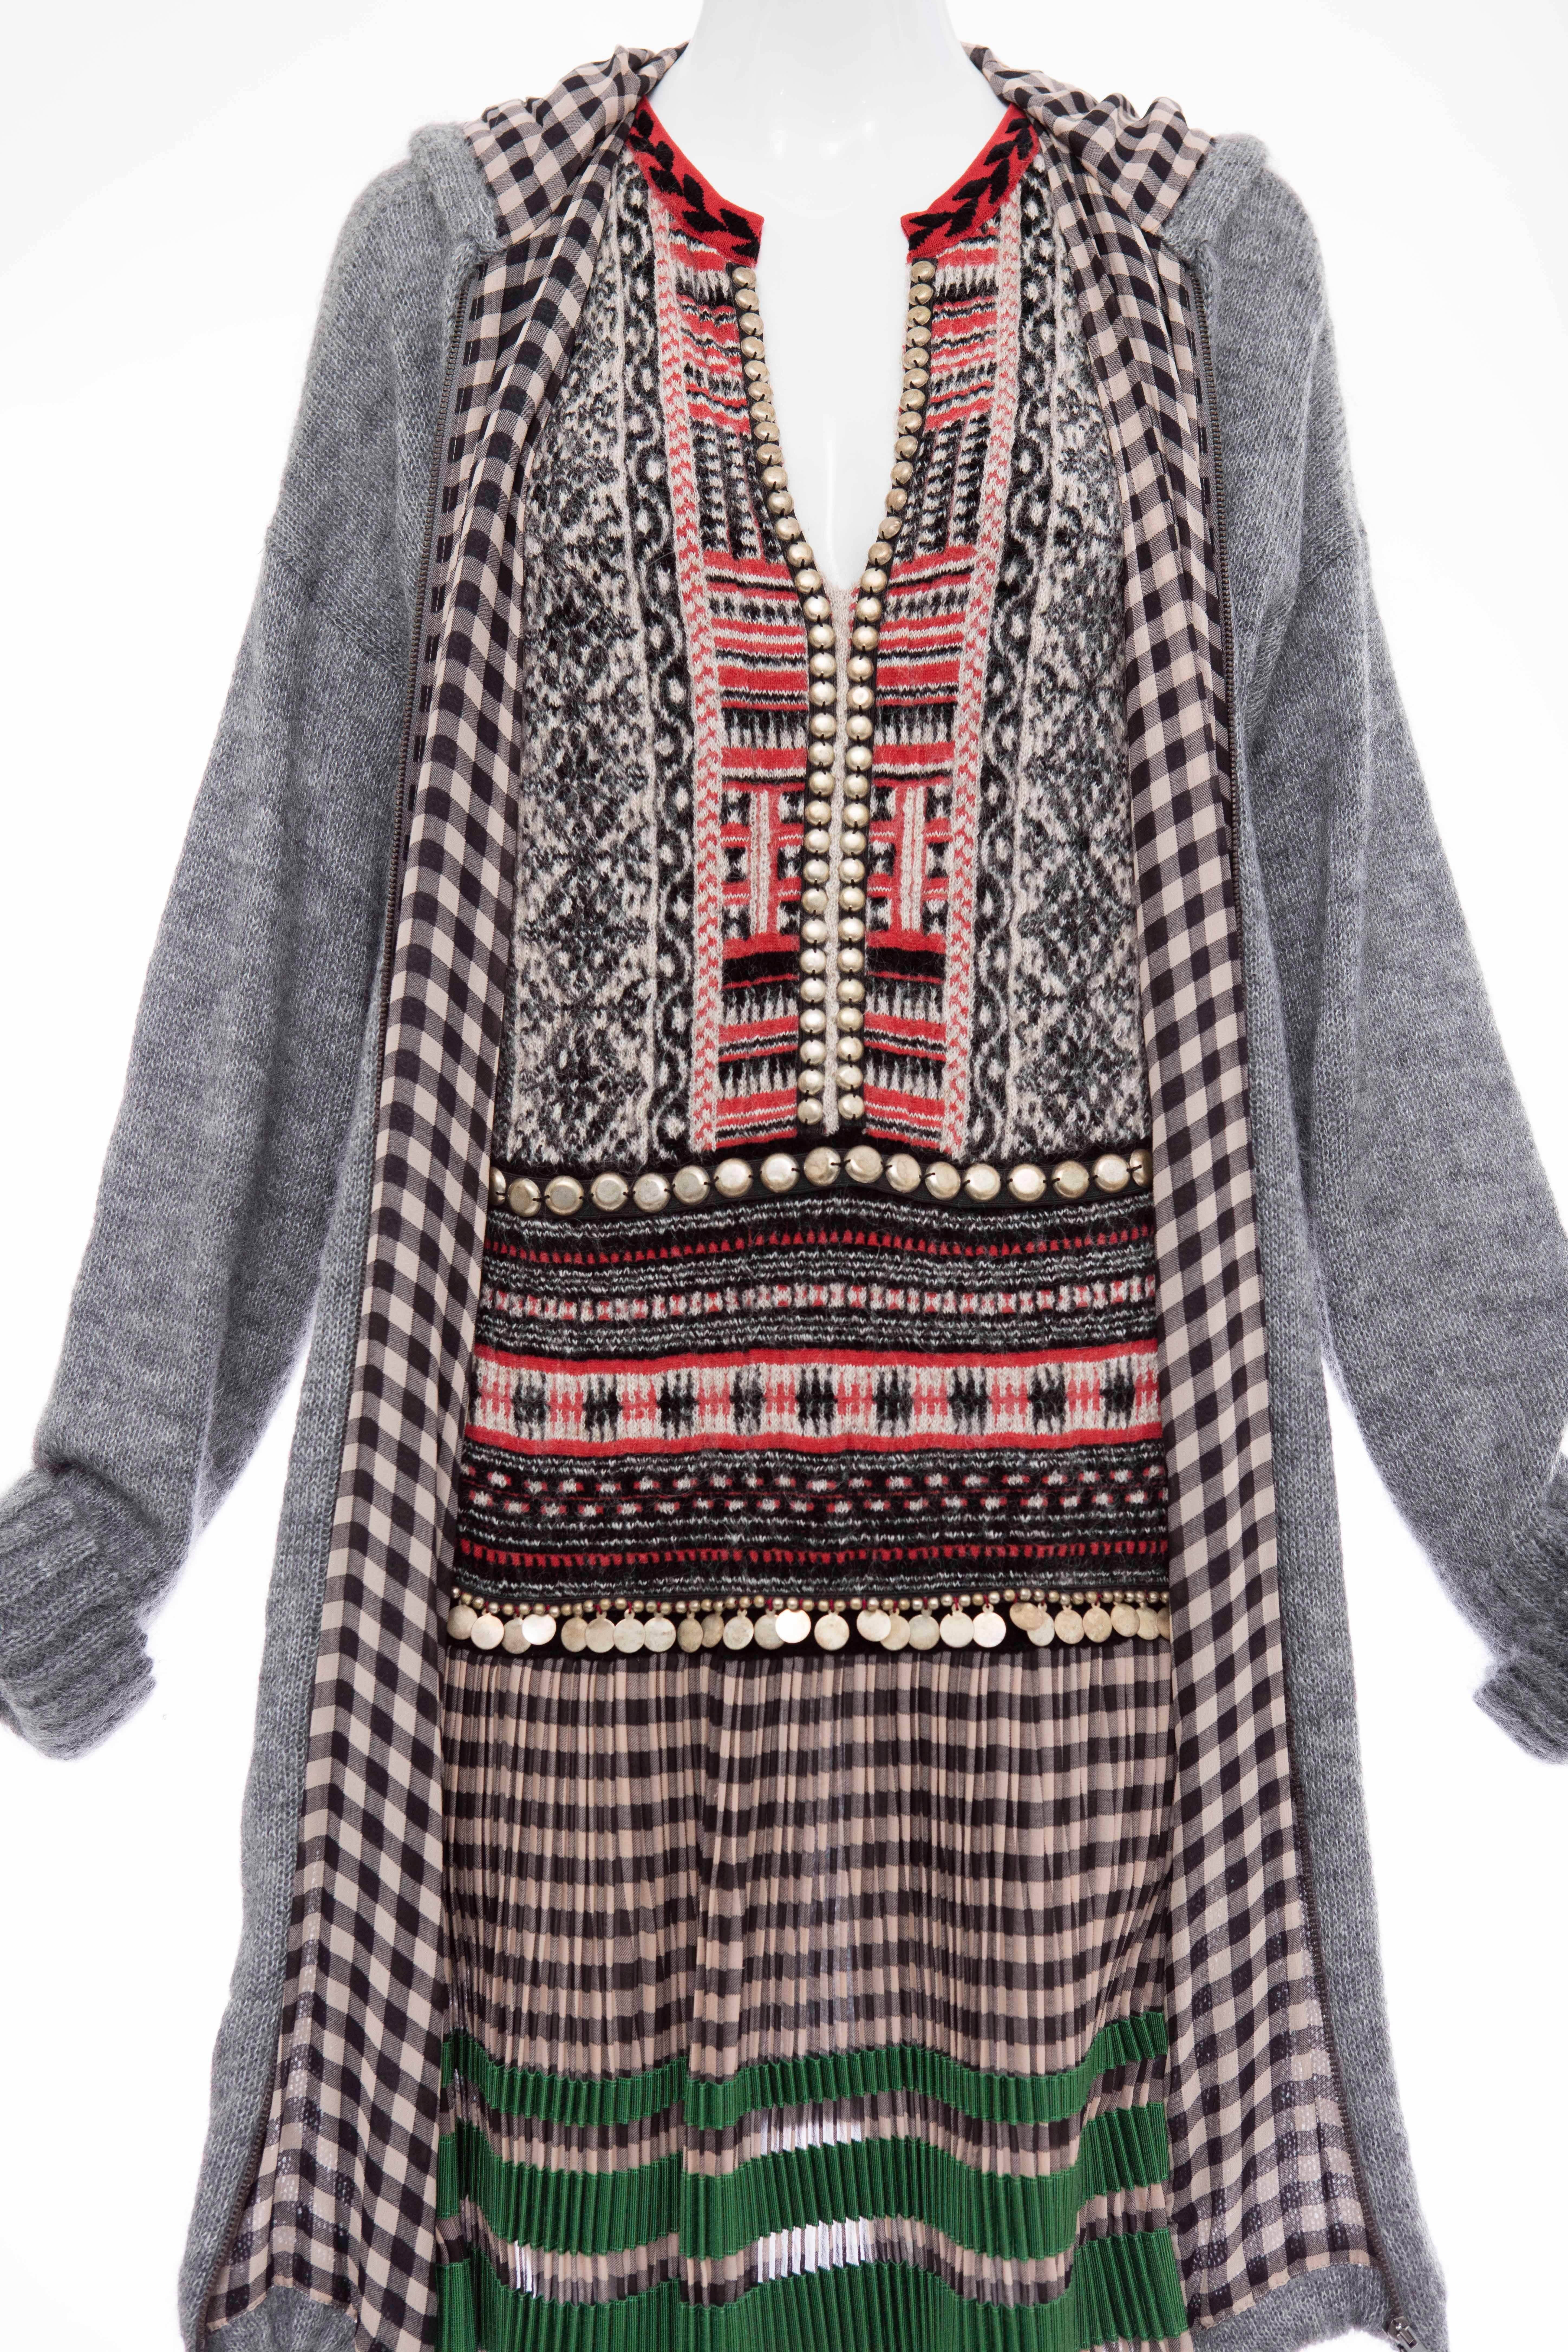 Jean Paul Gaultier Mohair Nylon Knit Dress With Hood , Autumn - Winter 2010 1